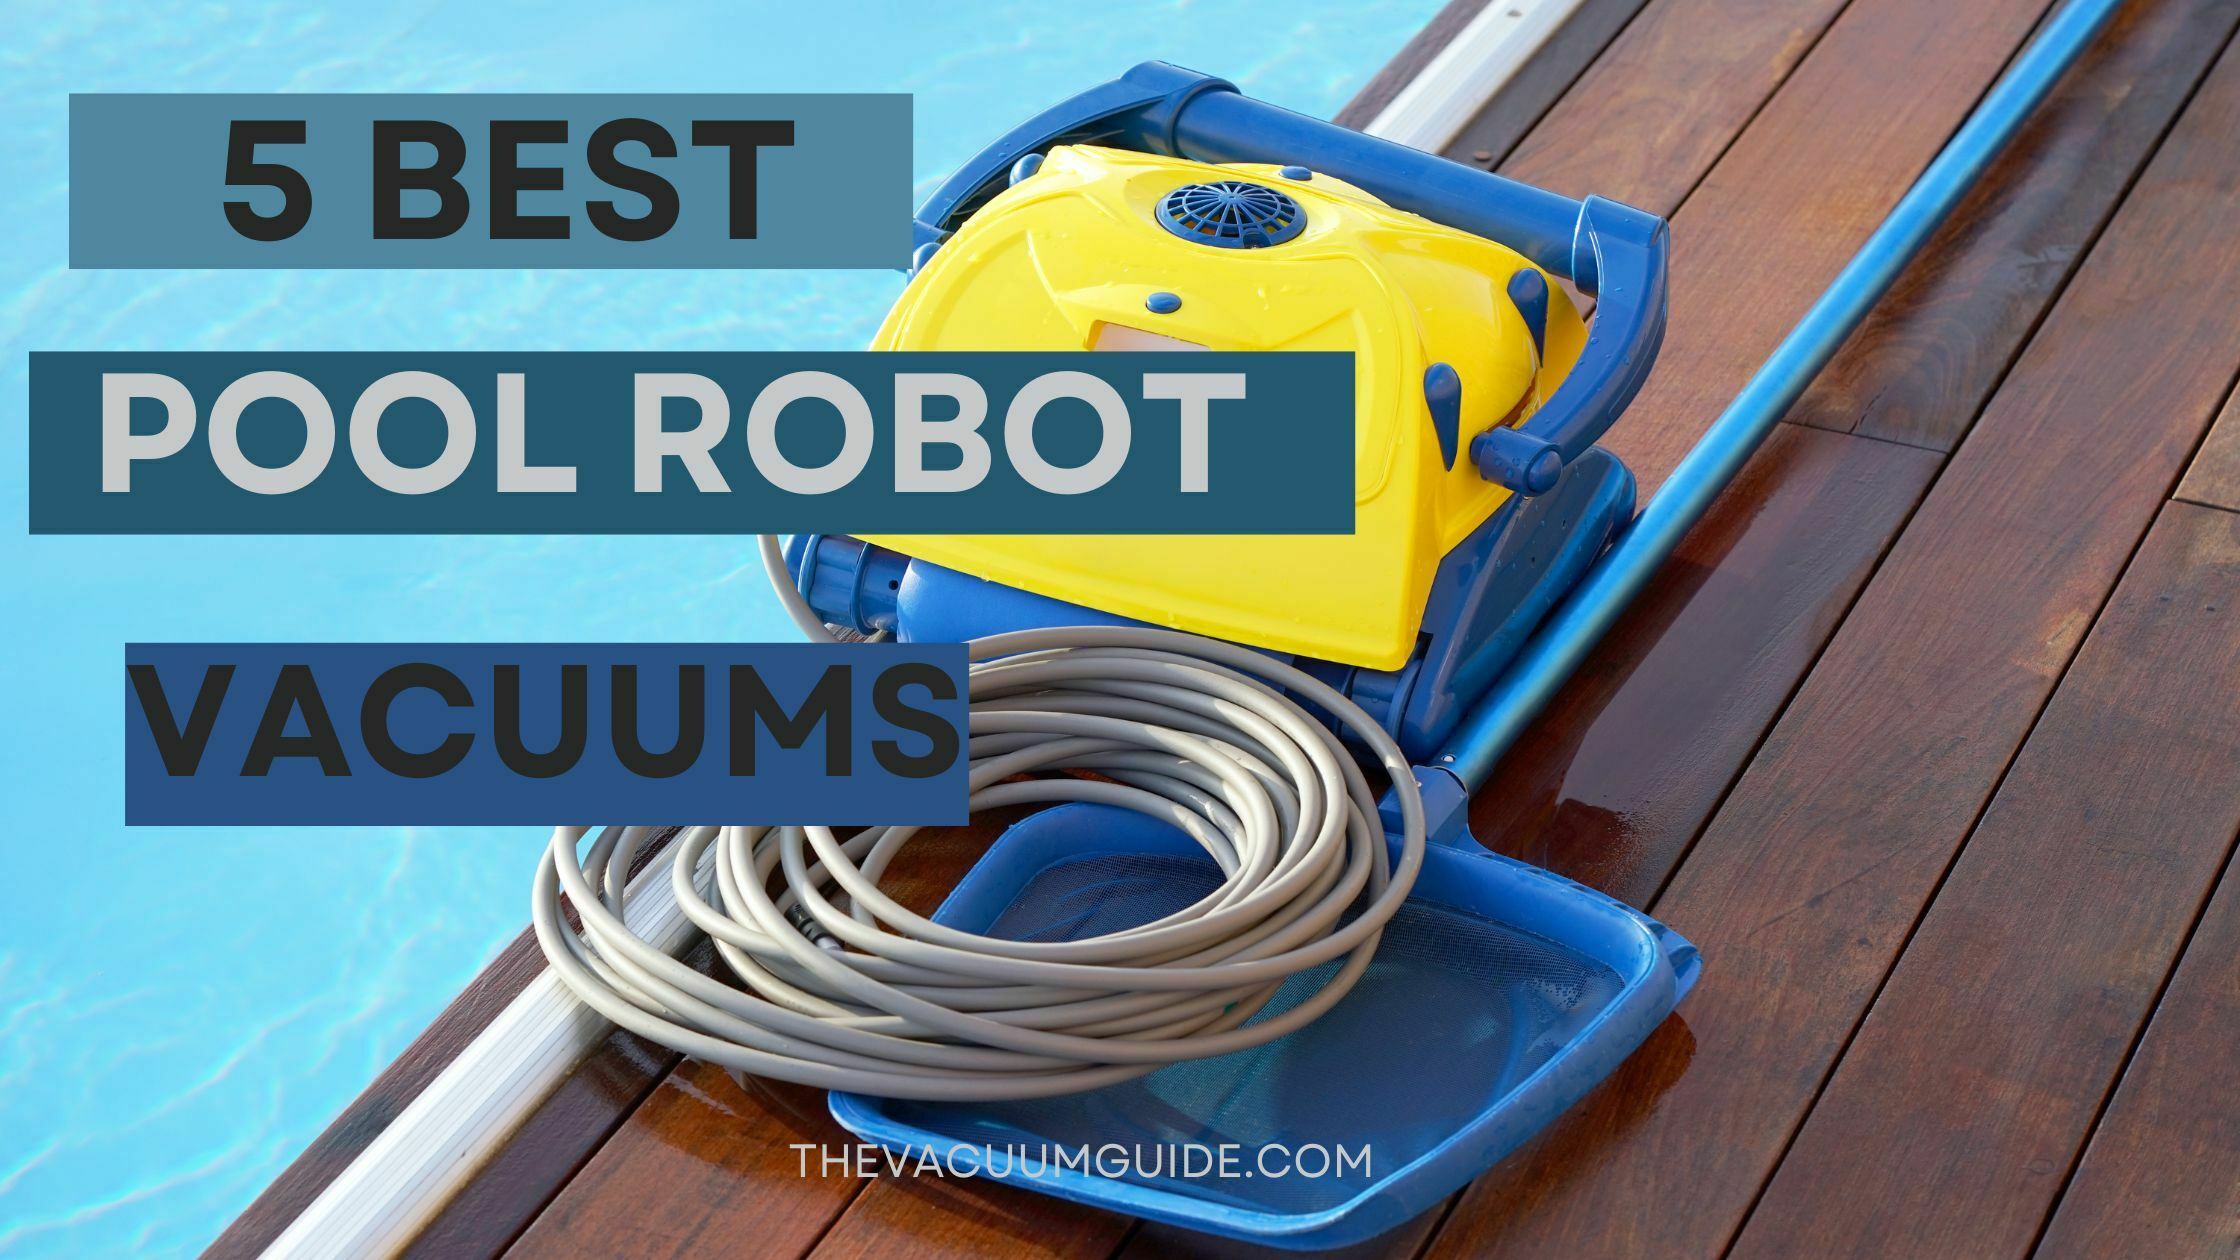 Best Pool Robot Vacuums